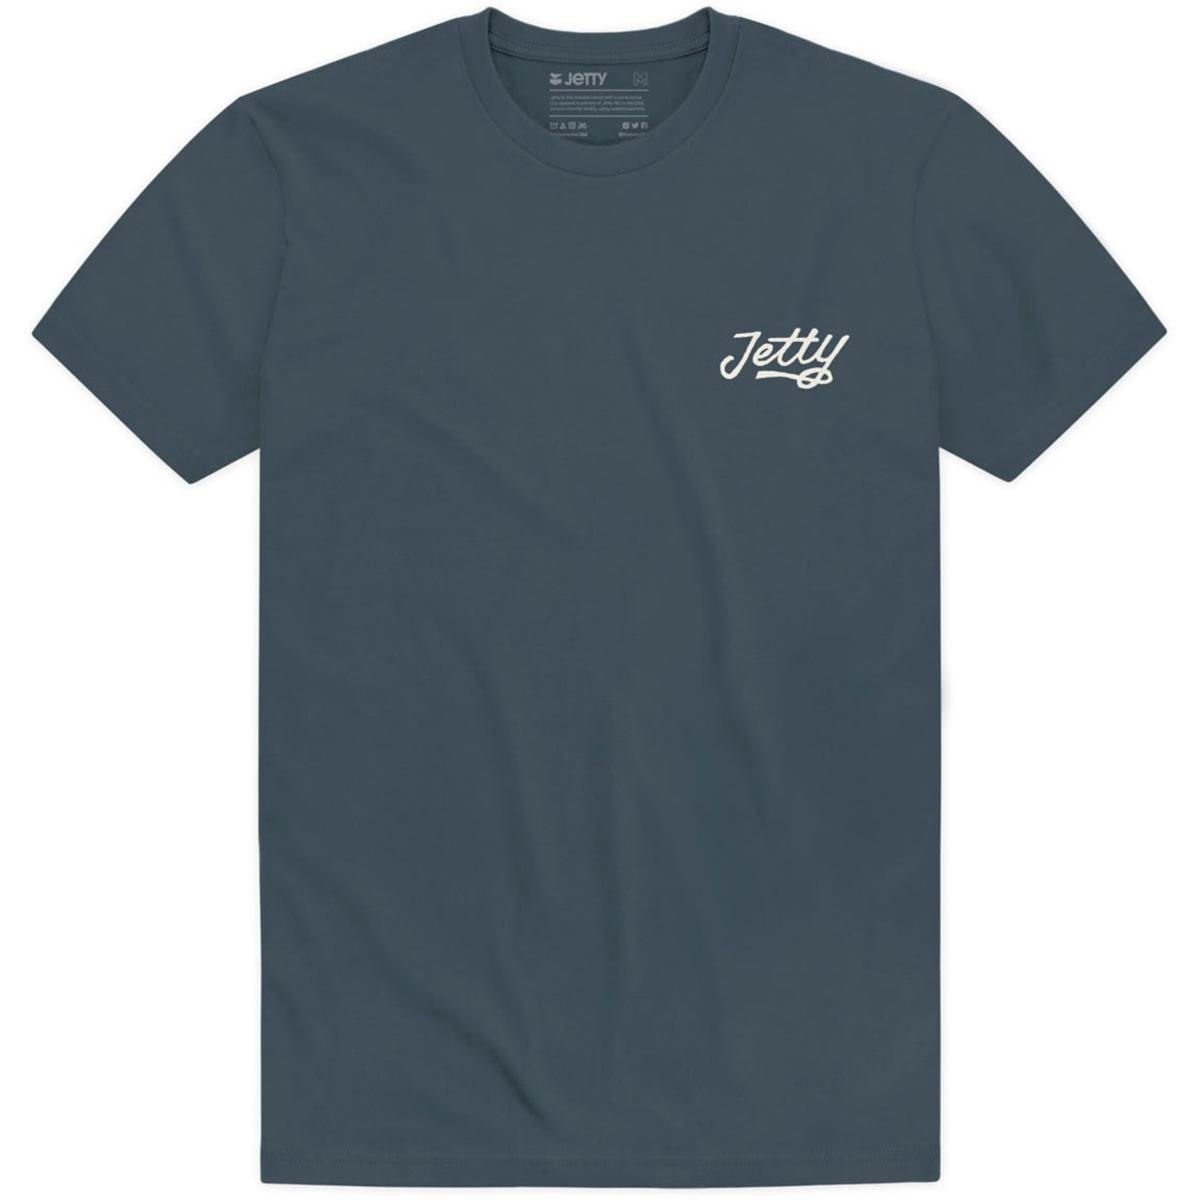 Jetty Splash T-Shirt - Men's